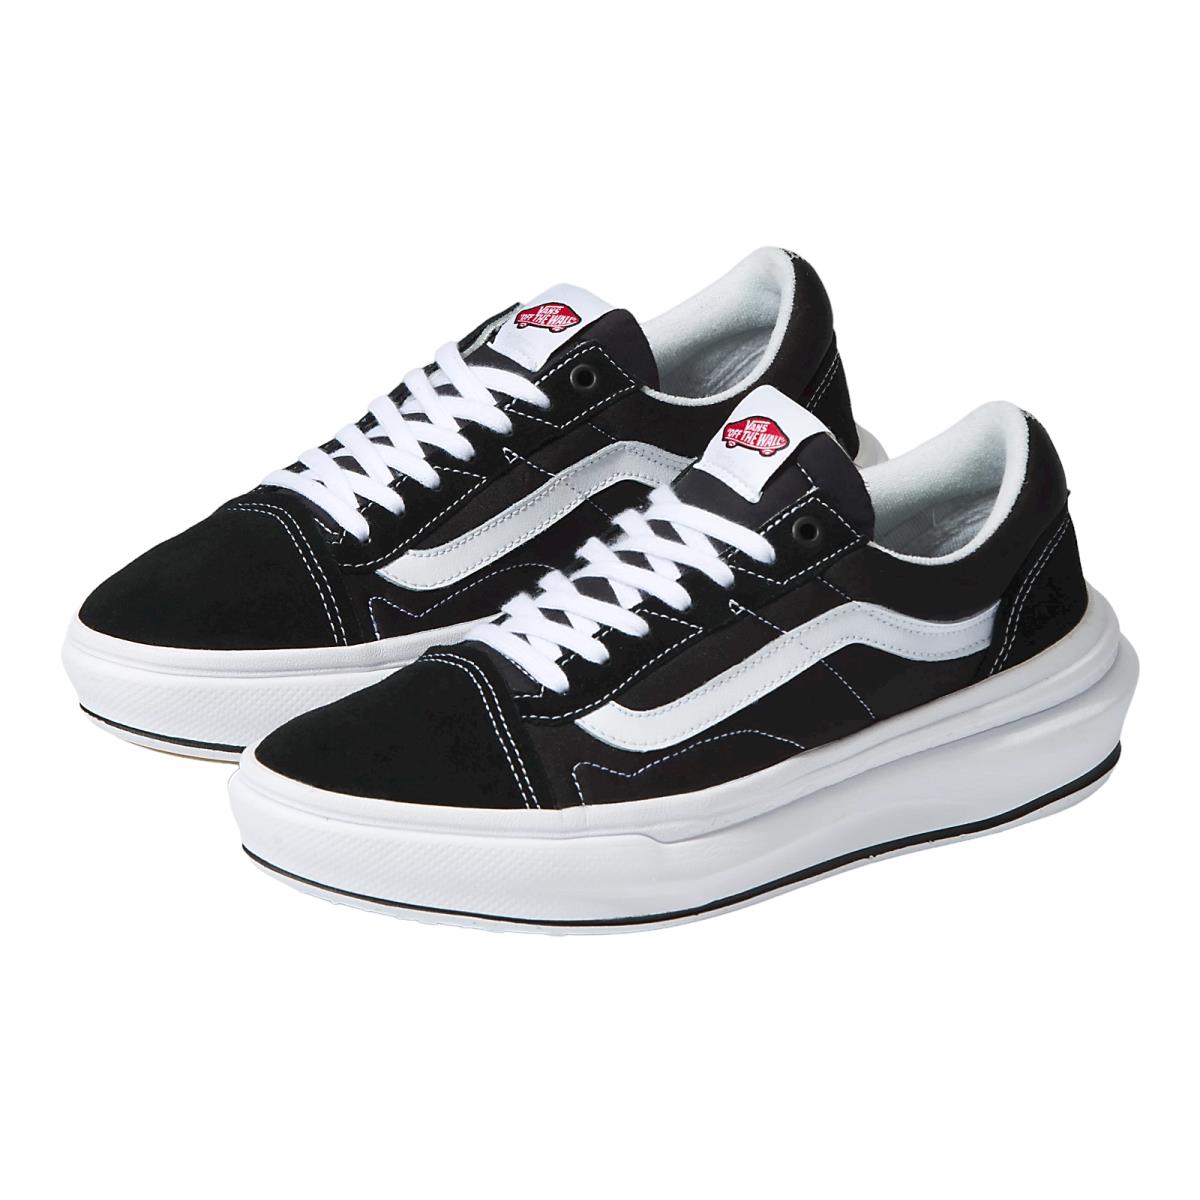 Vans - Comfycush Old Skool Overt CC Sneakers - Black/white